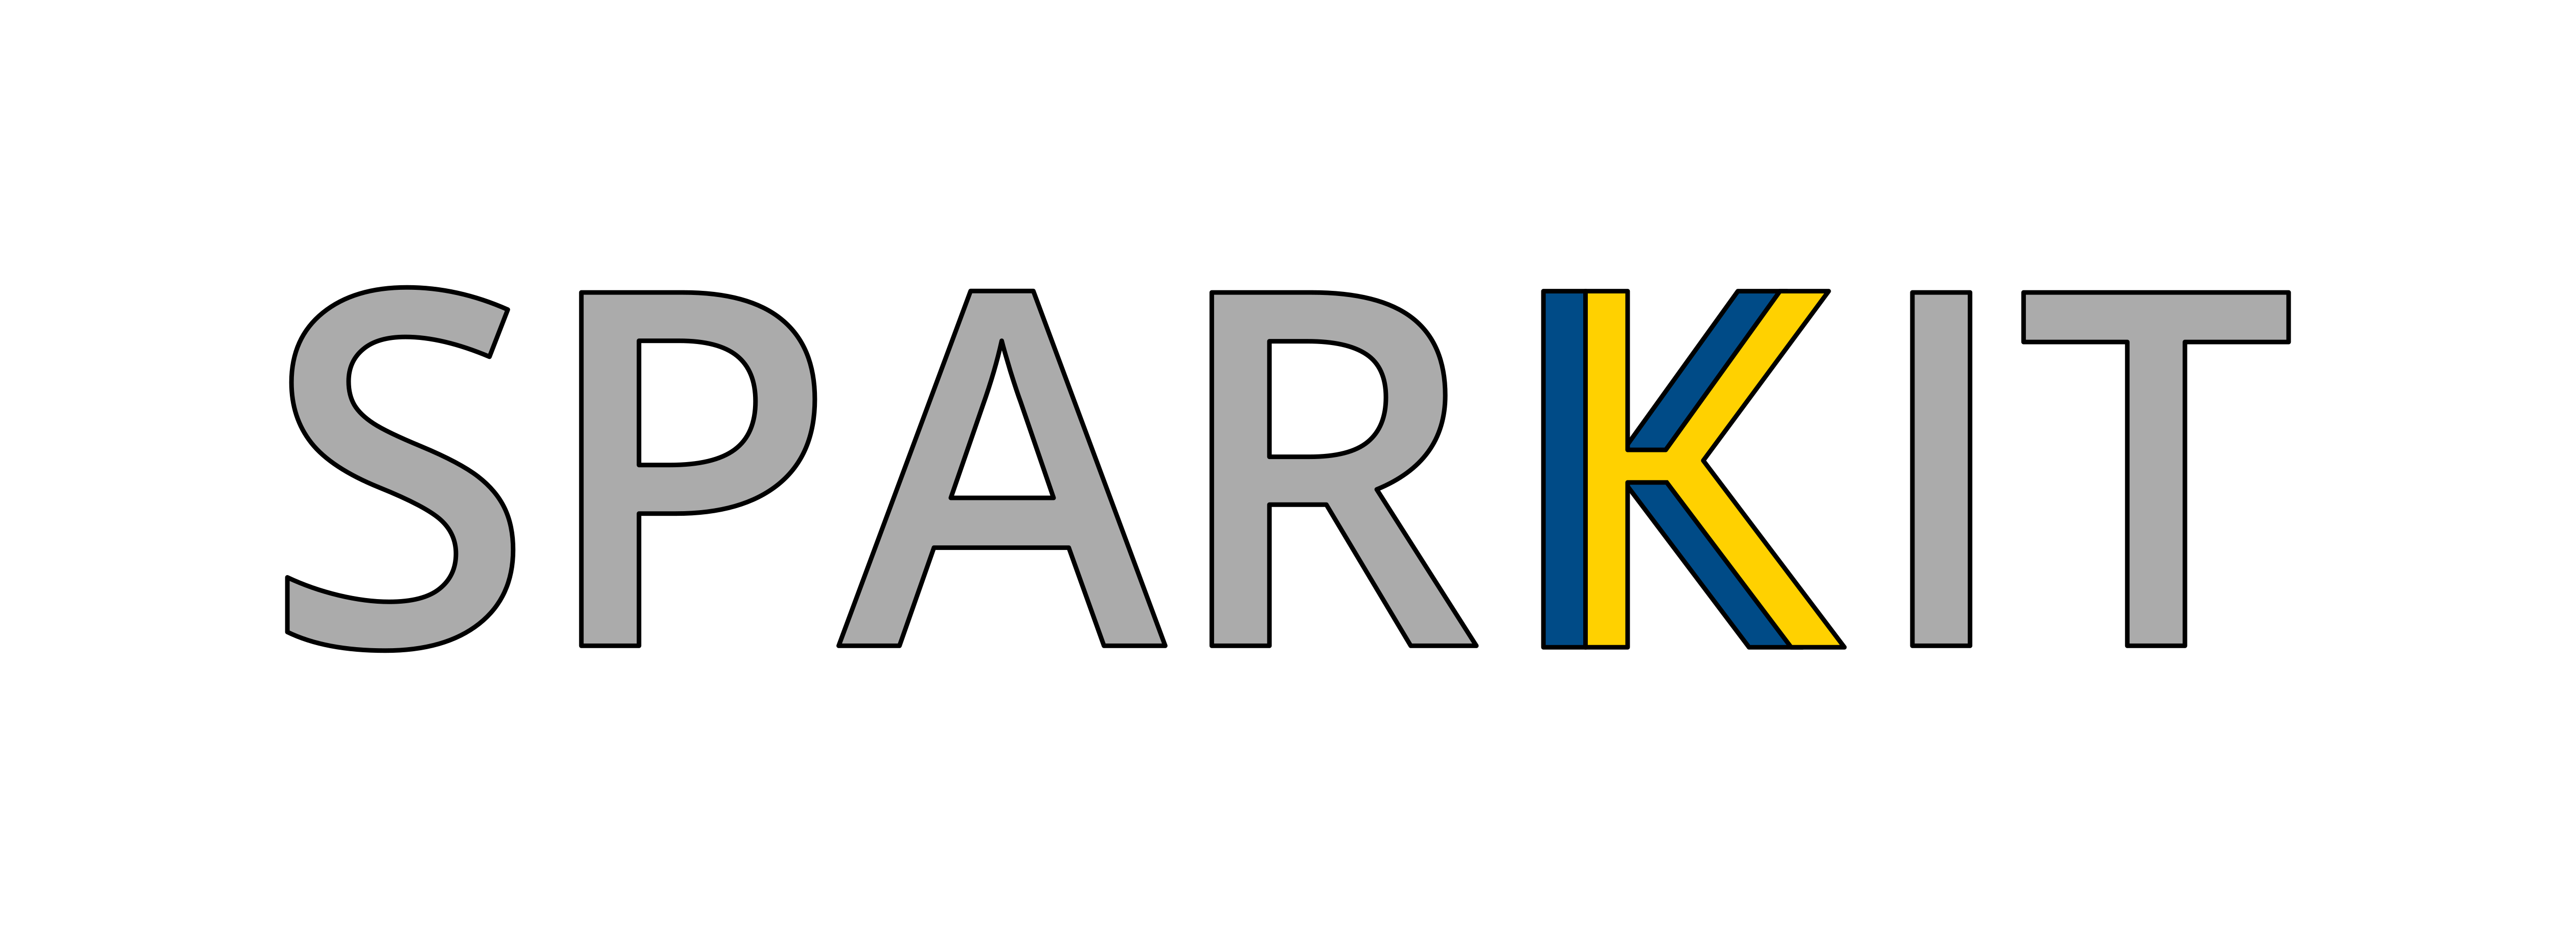 The sparkit logo.